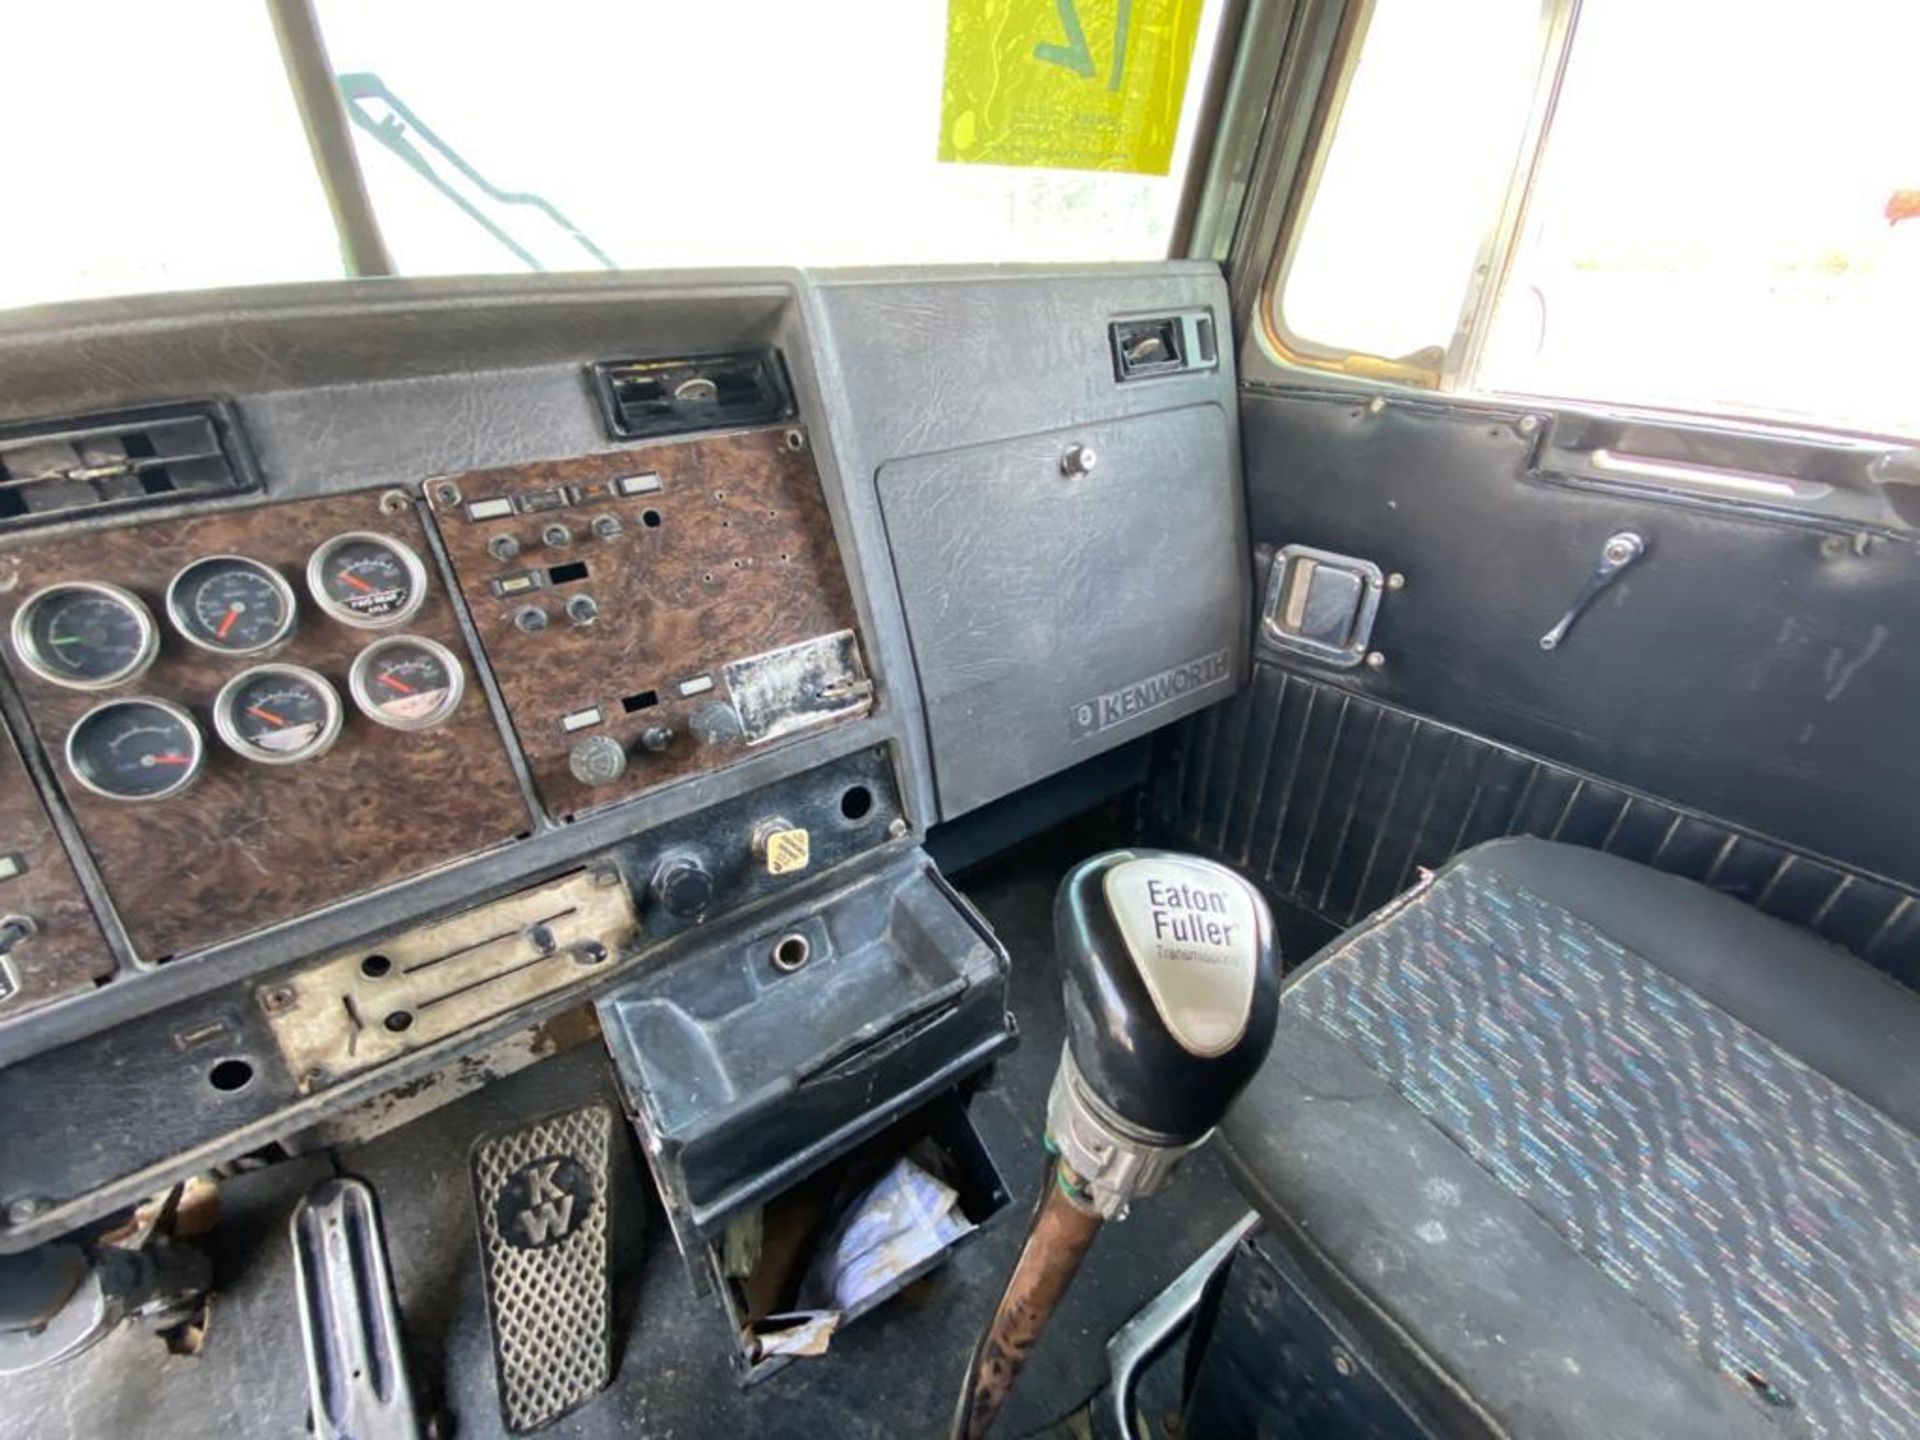 1982 Kenworth Dump Truck, standard transmission of 10 speeds, with Cummins motor - Image 31 of 67